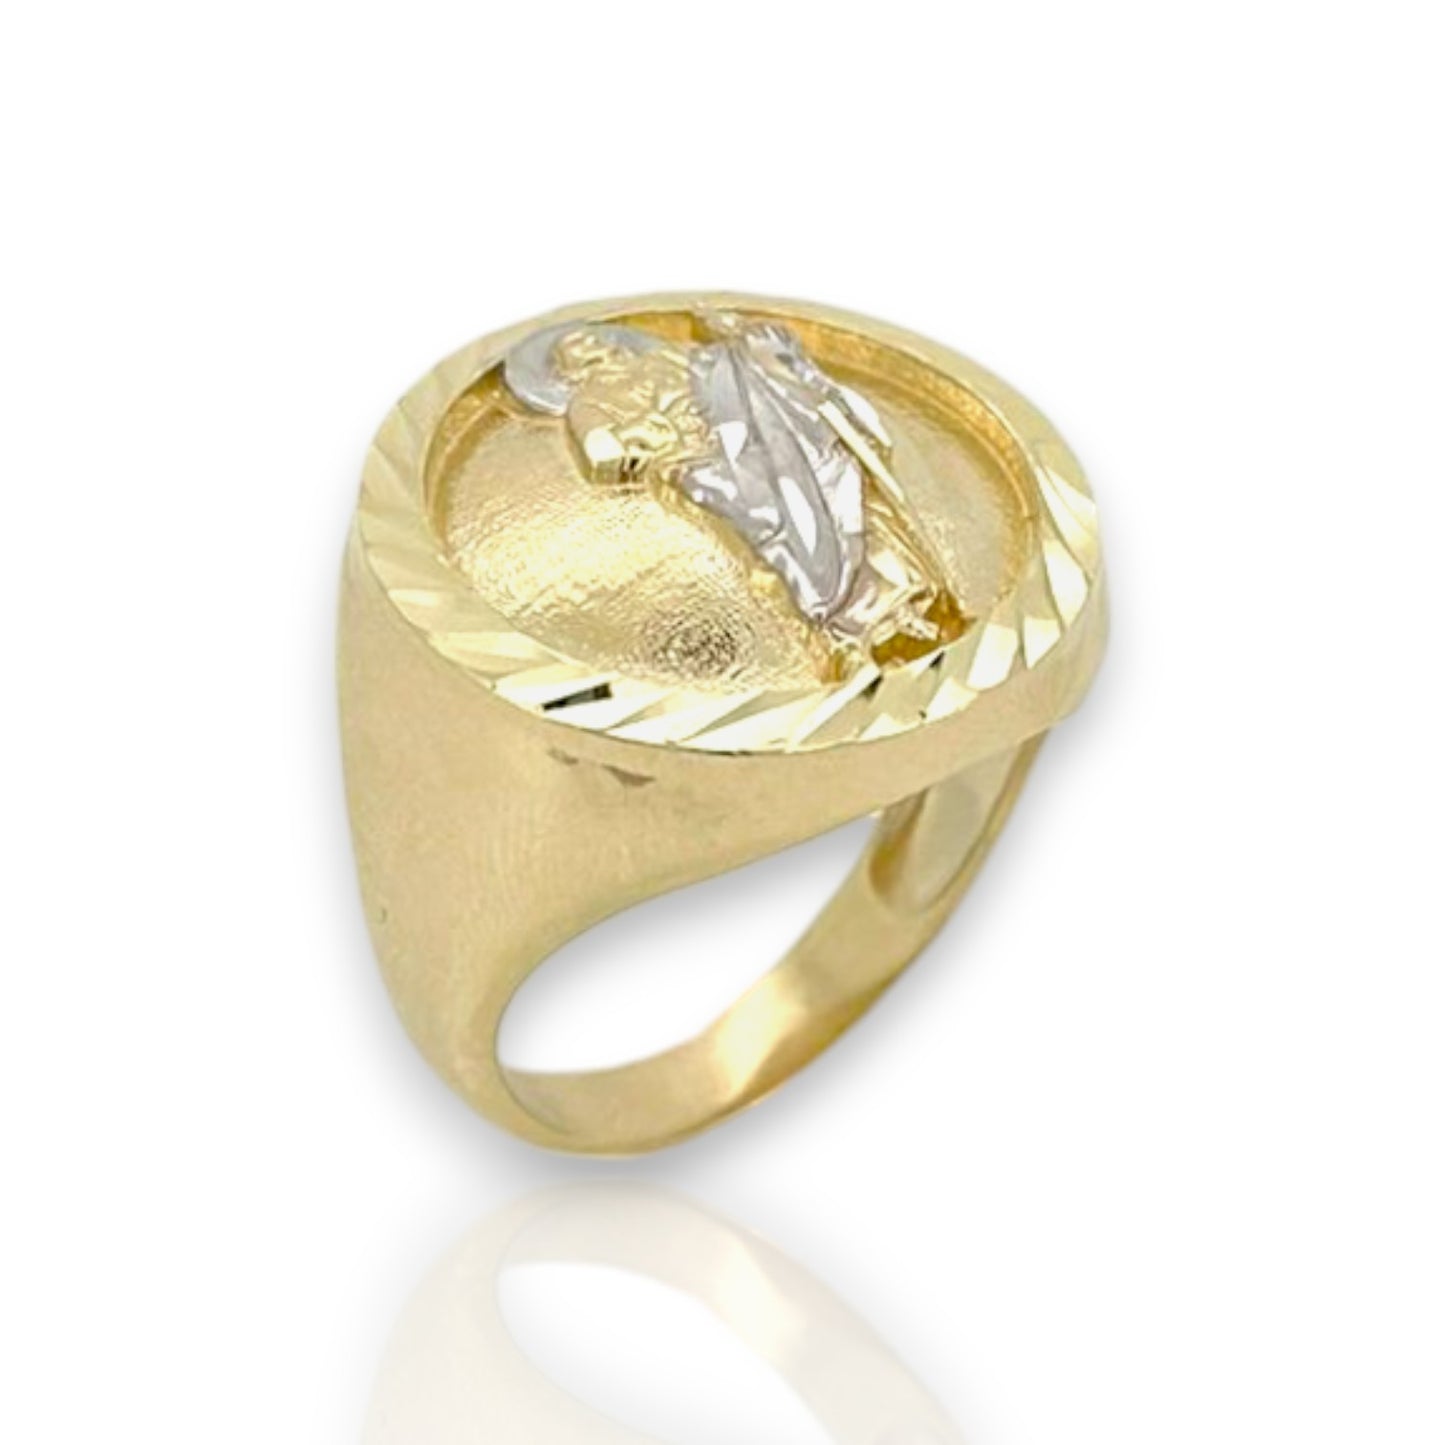 Saint Jude Ring - 10k Yellow Gold